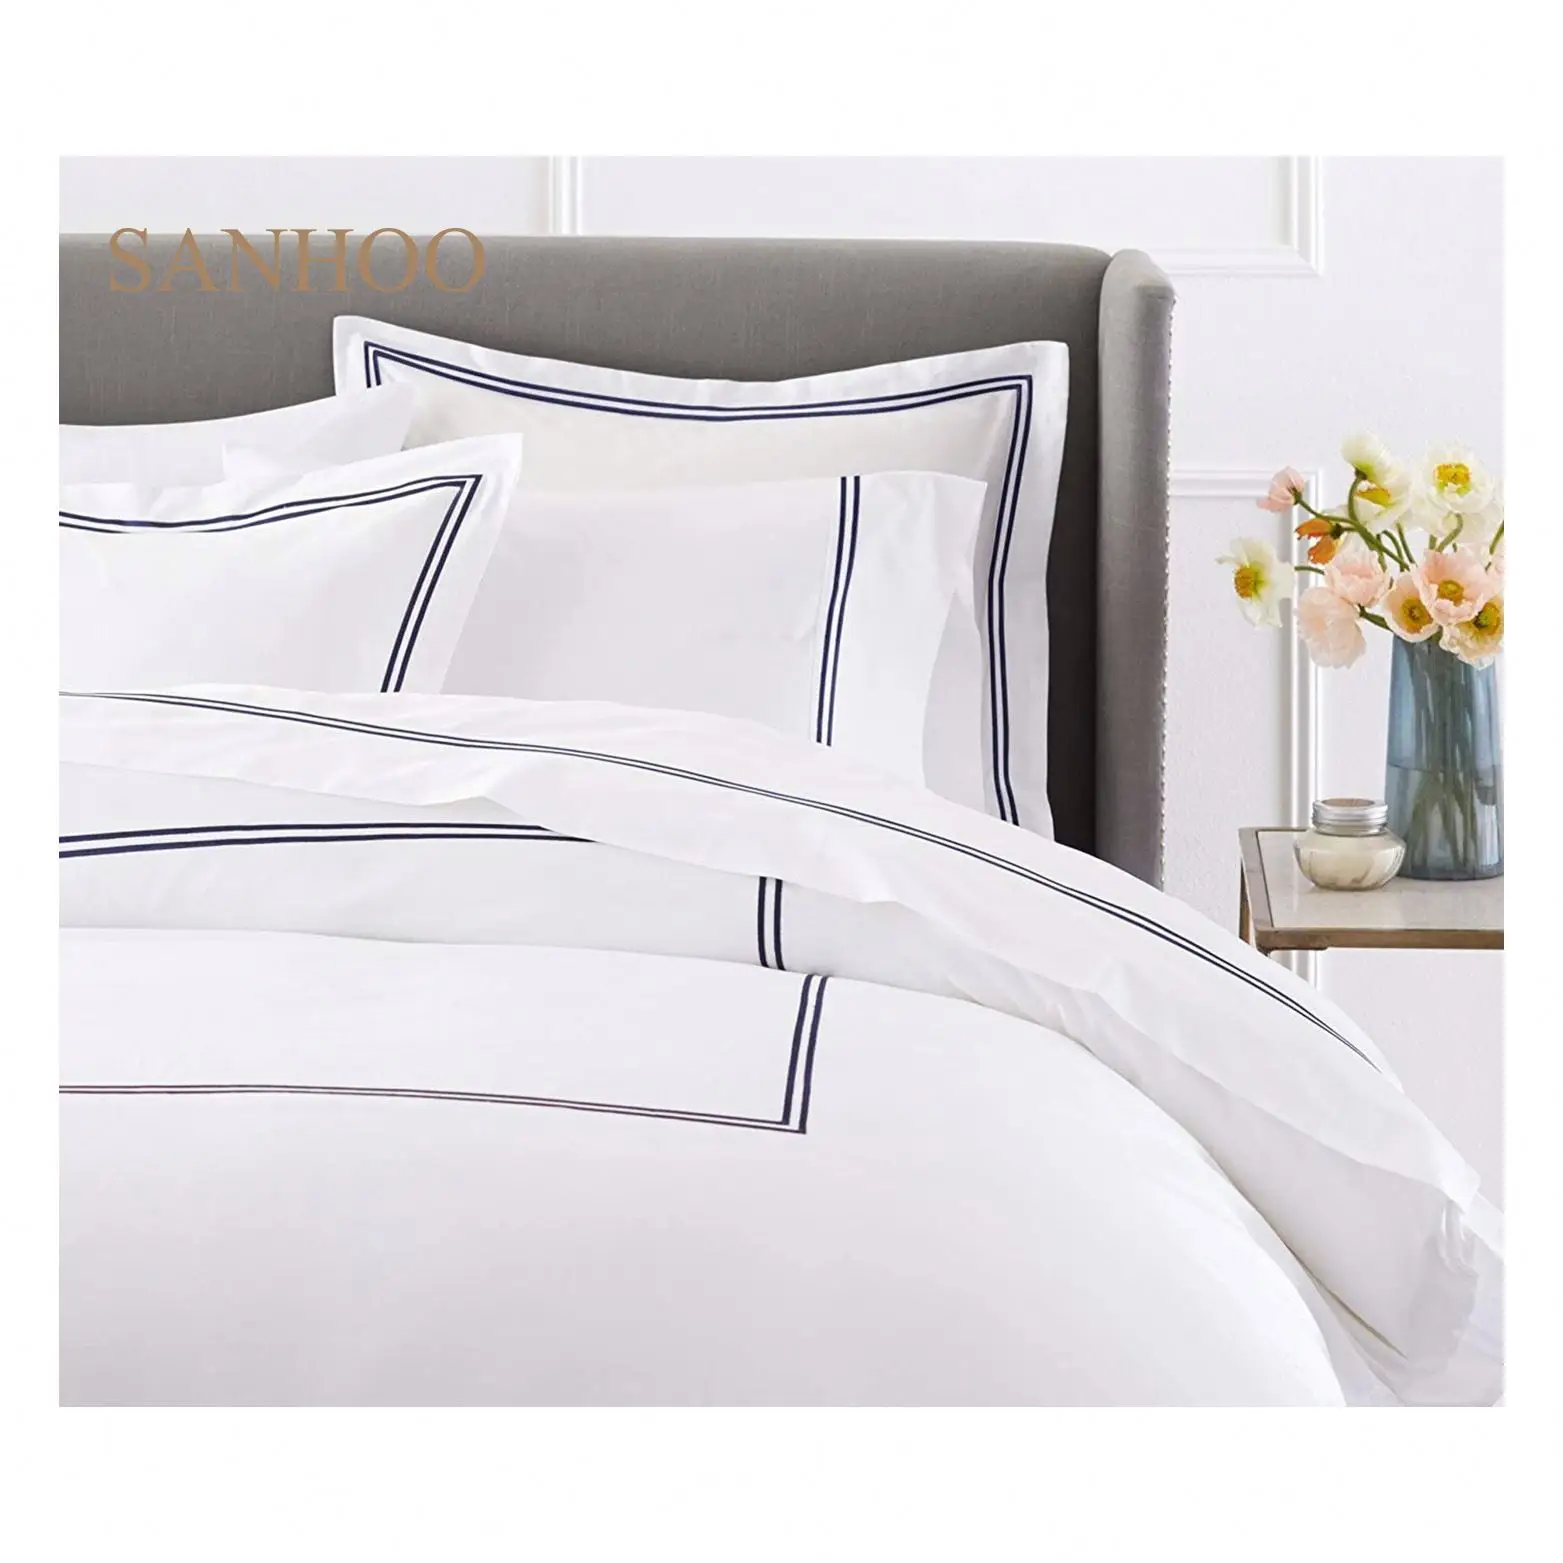 SANHOO Luxury 100 Cotton 5 Star Hotel Bedding 400 Thread Count Queen Hilton White Fitted Bedsheet Set